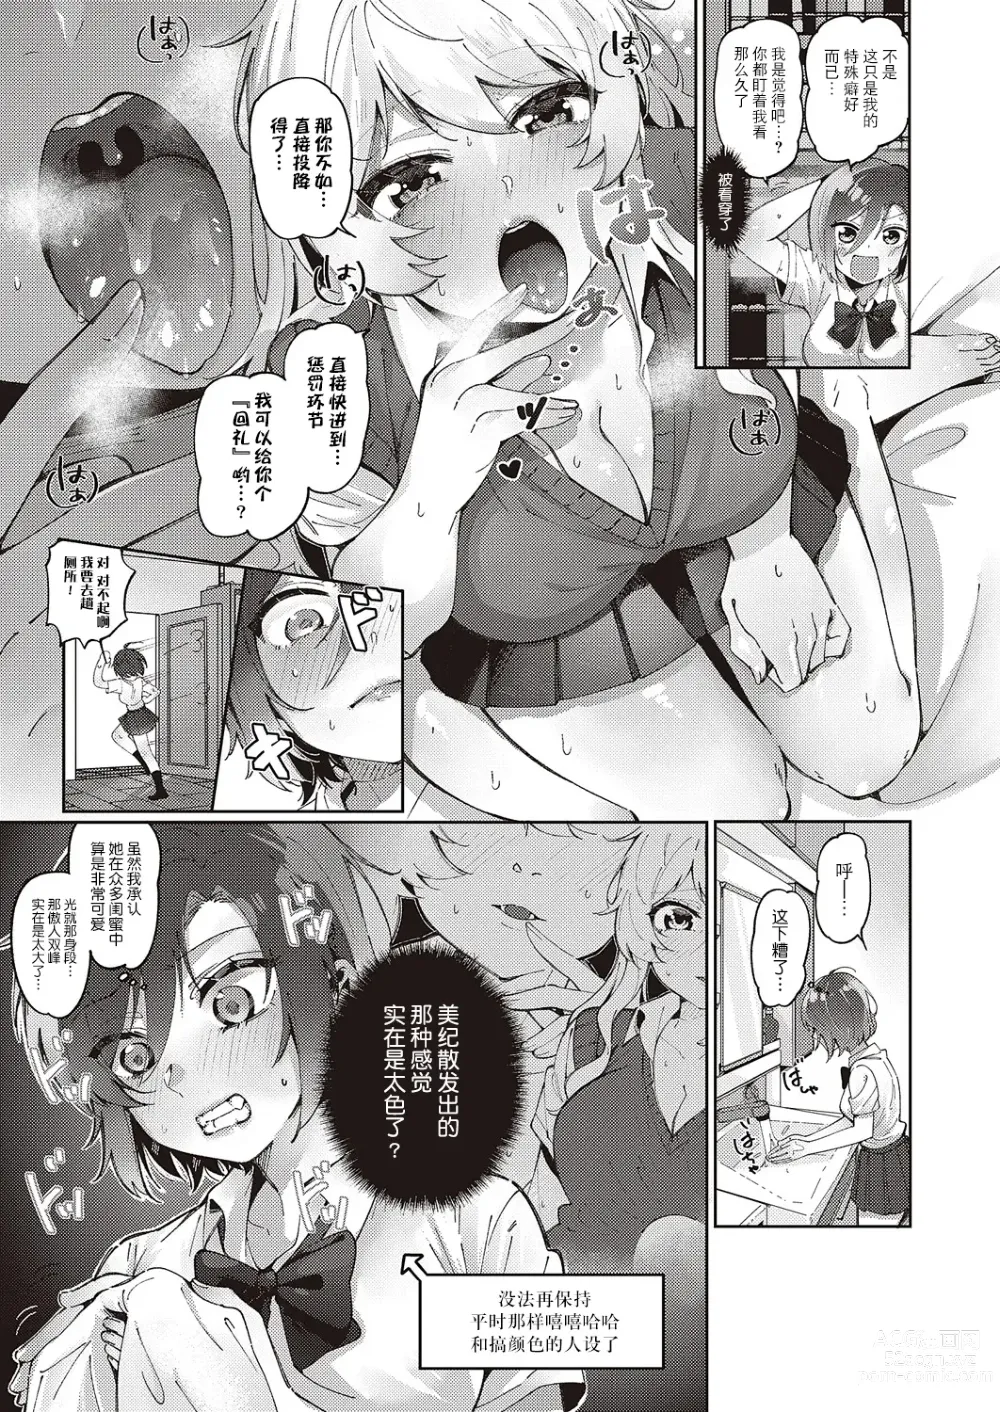 Page 3 of manga Yuri Fetish Life Ch. 2